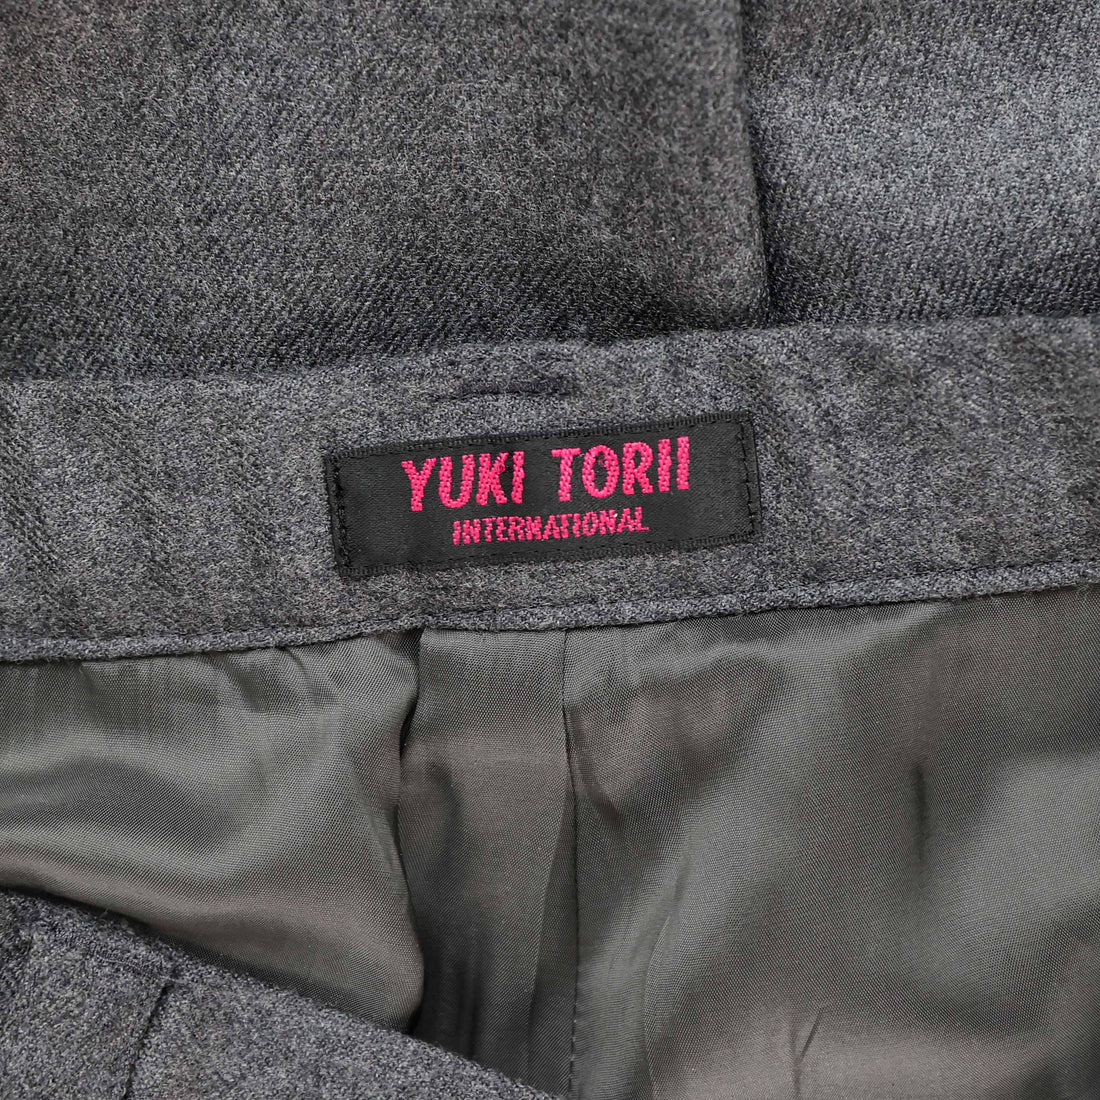 Yuki Torii pleated pants in anthracite